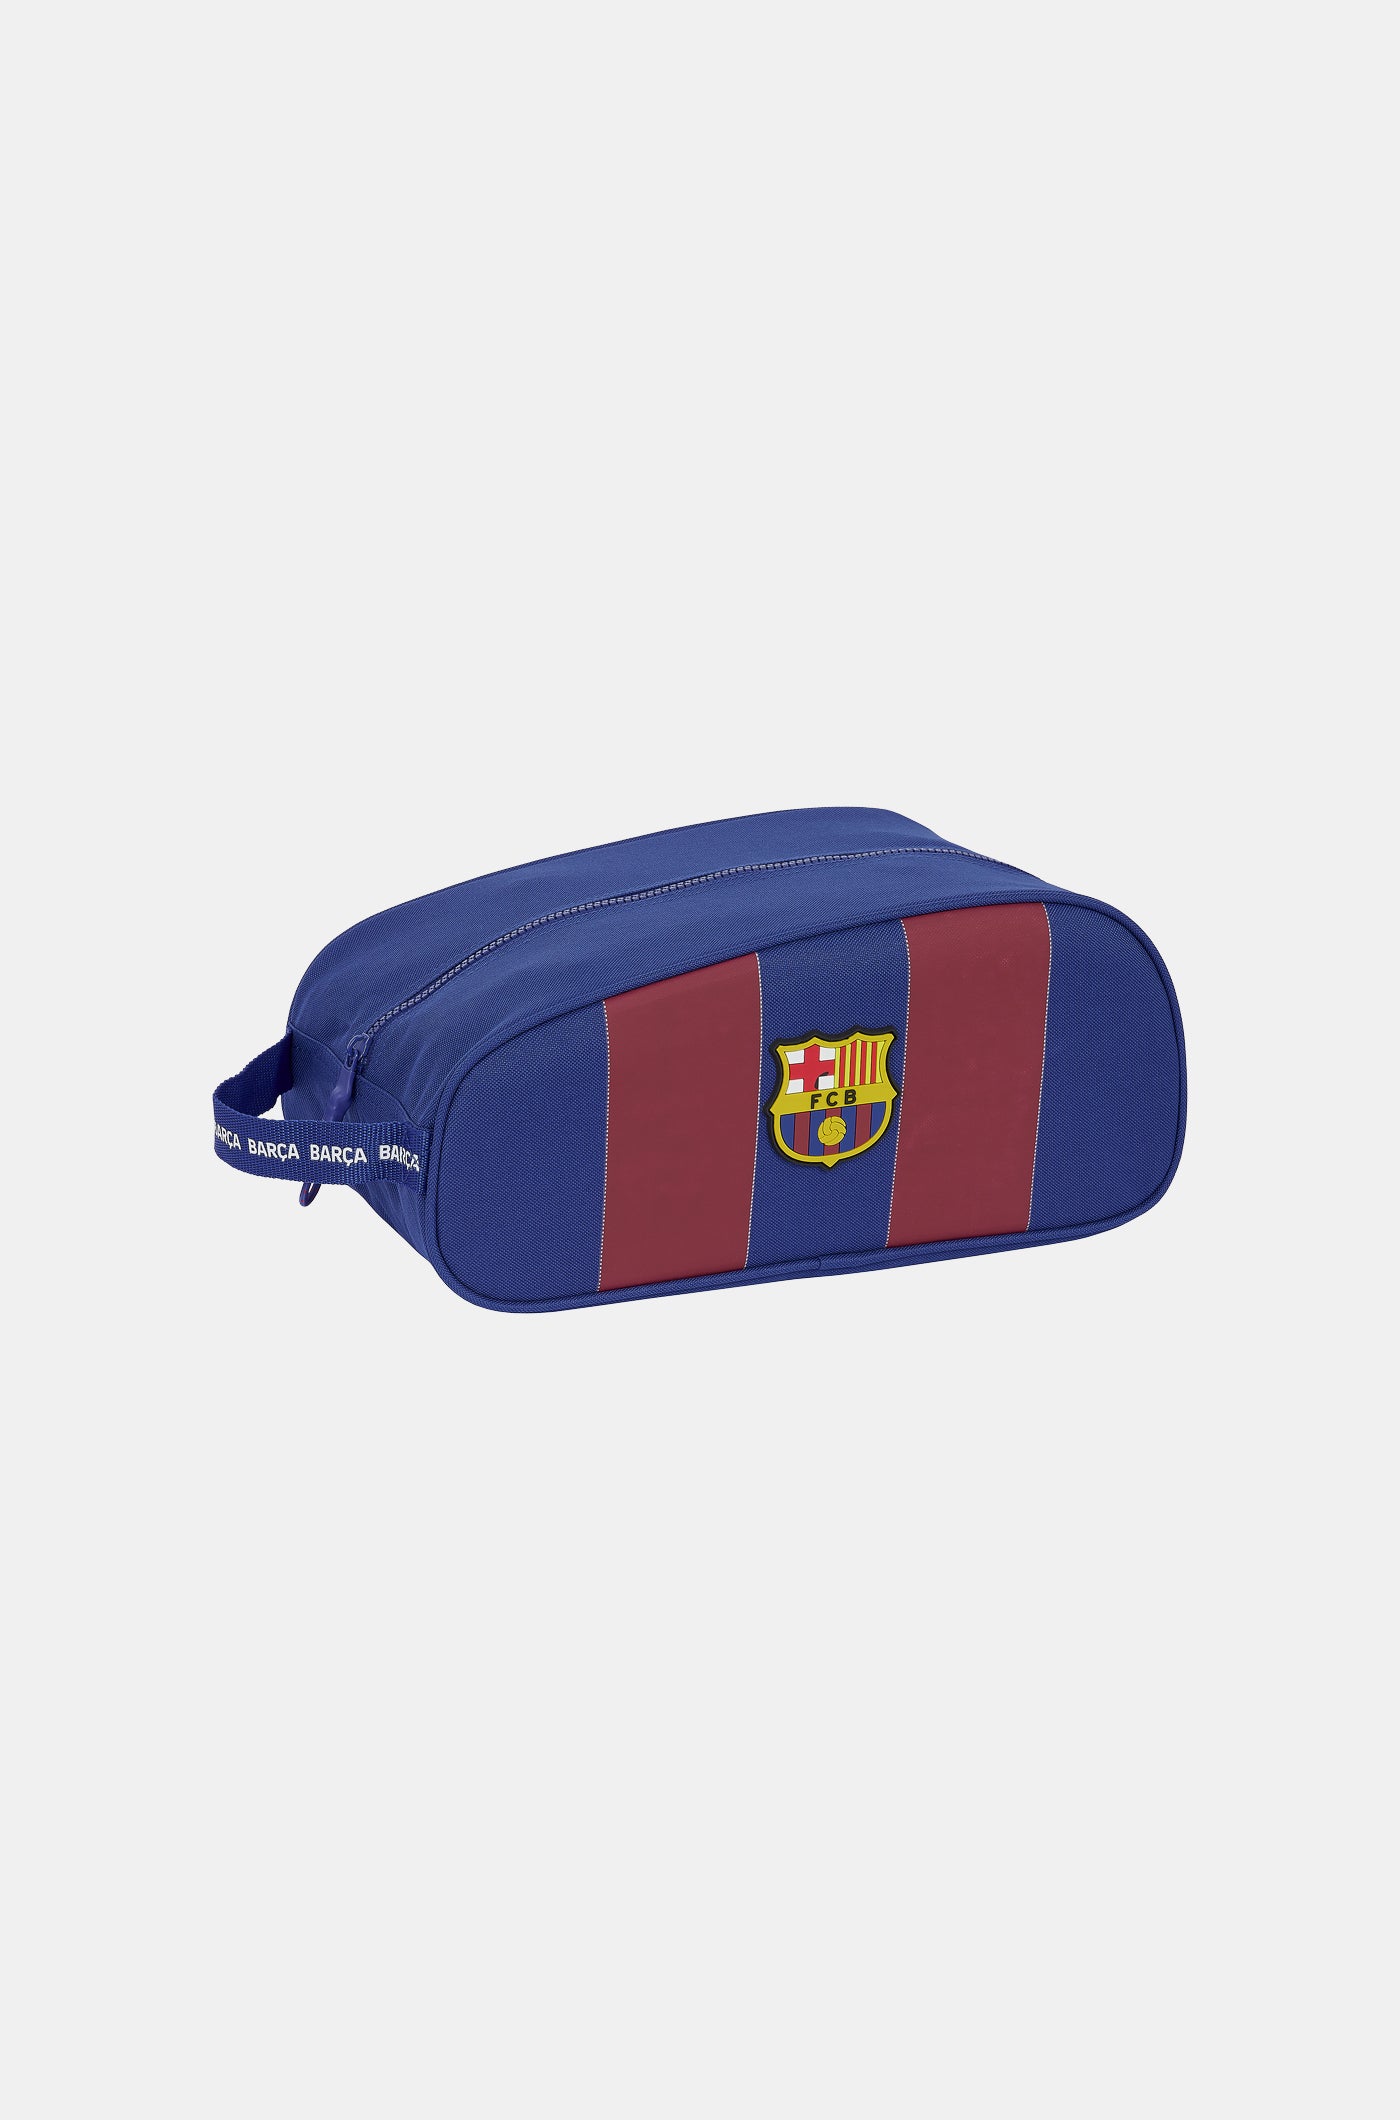 Mini sac à dos enfant FC Barcelone JDI 2022/23 - Nike - Bagagerie